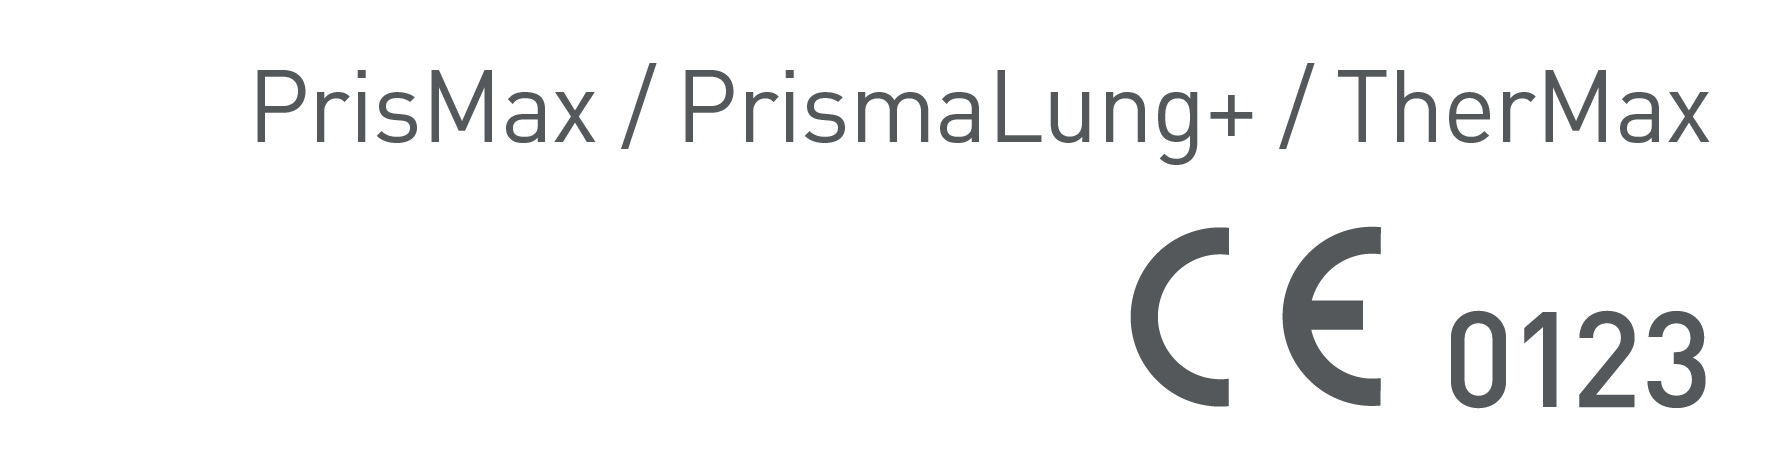 Prismax-Prismalung-Thermax